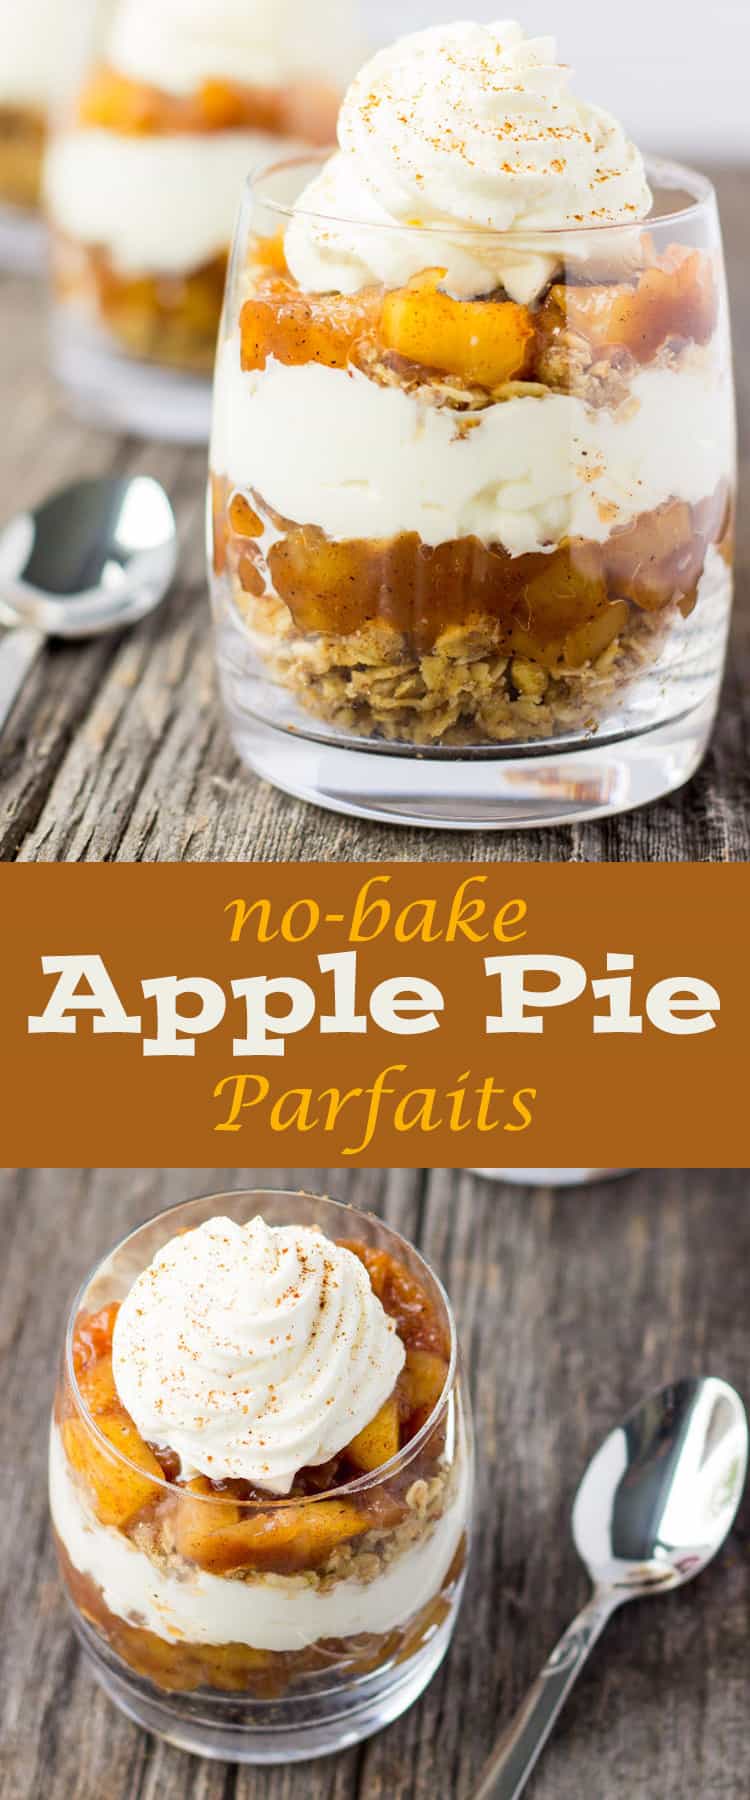 no-bake apple pie